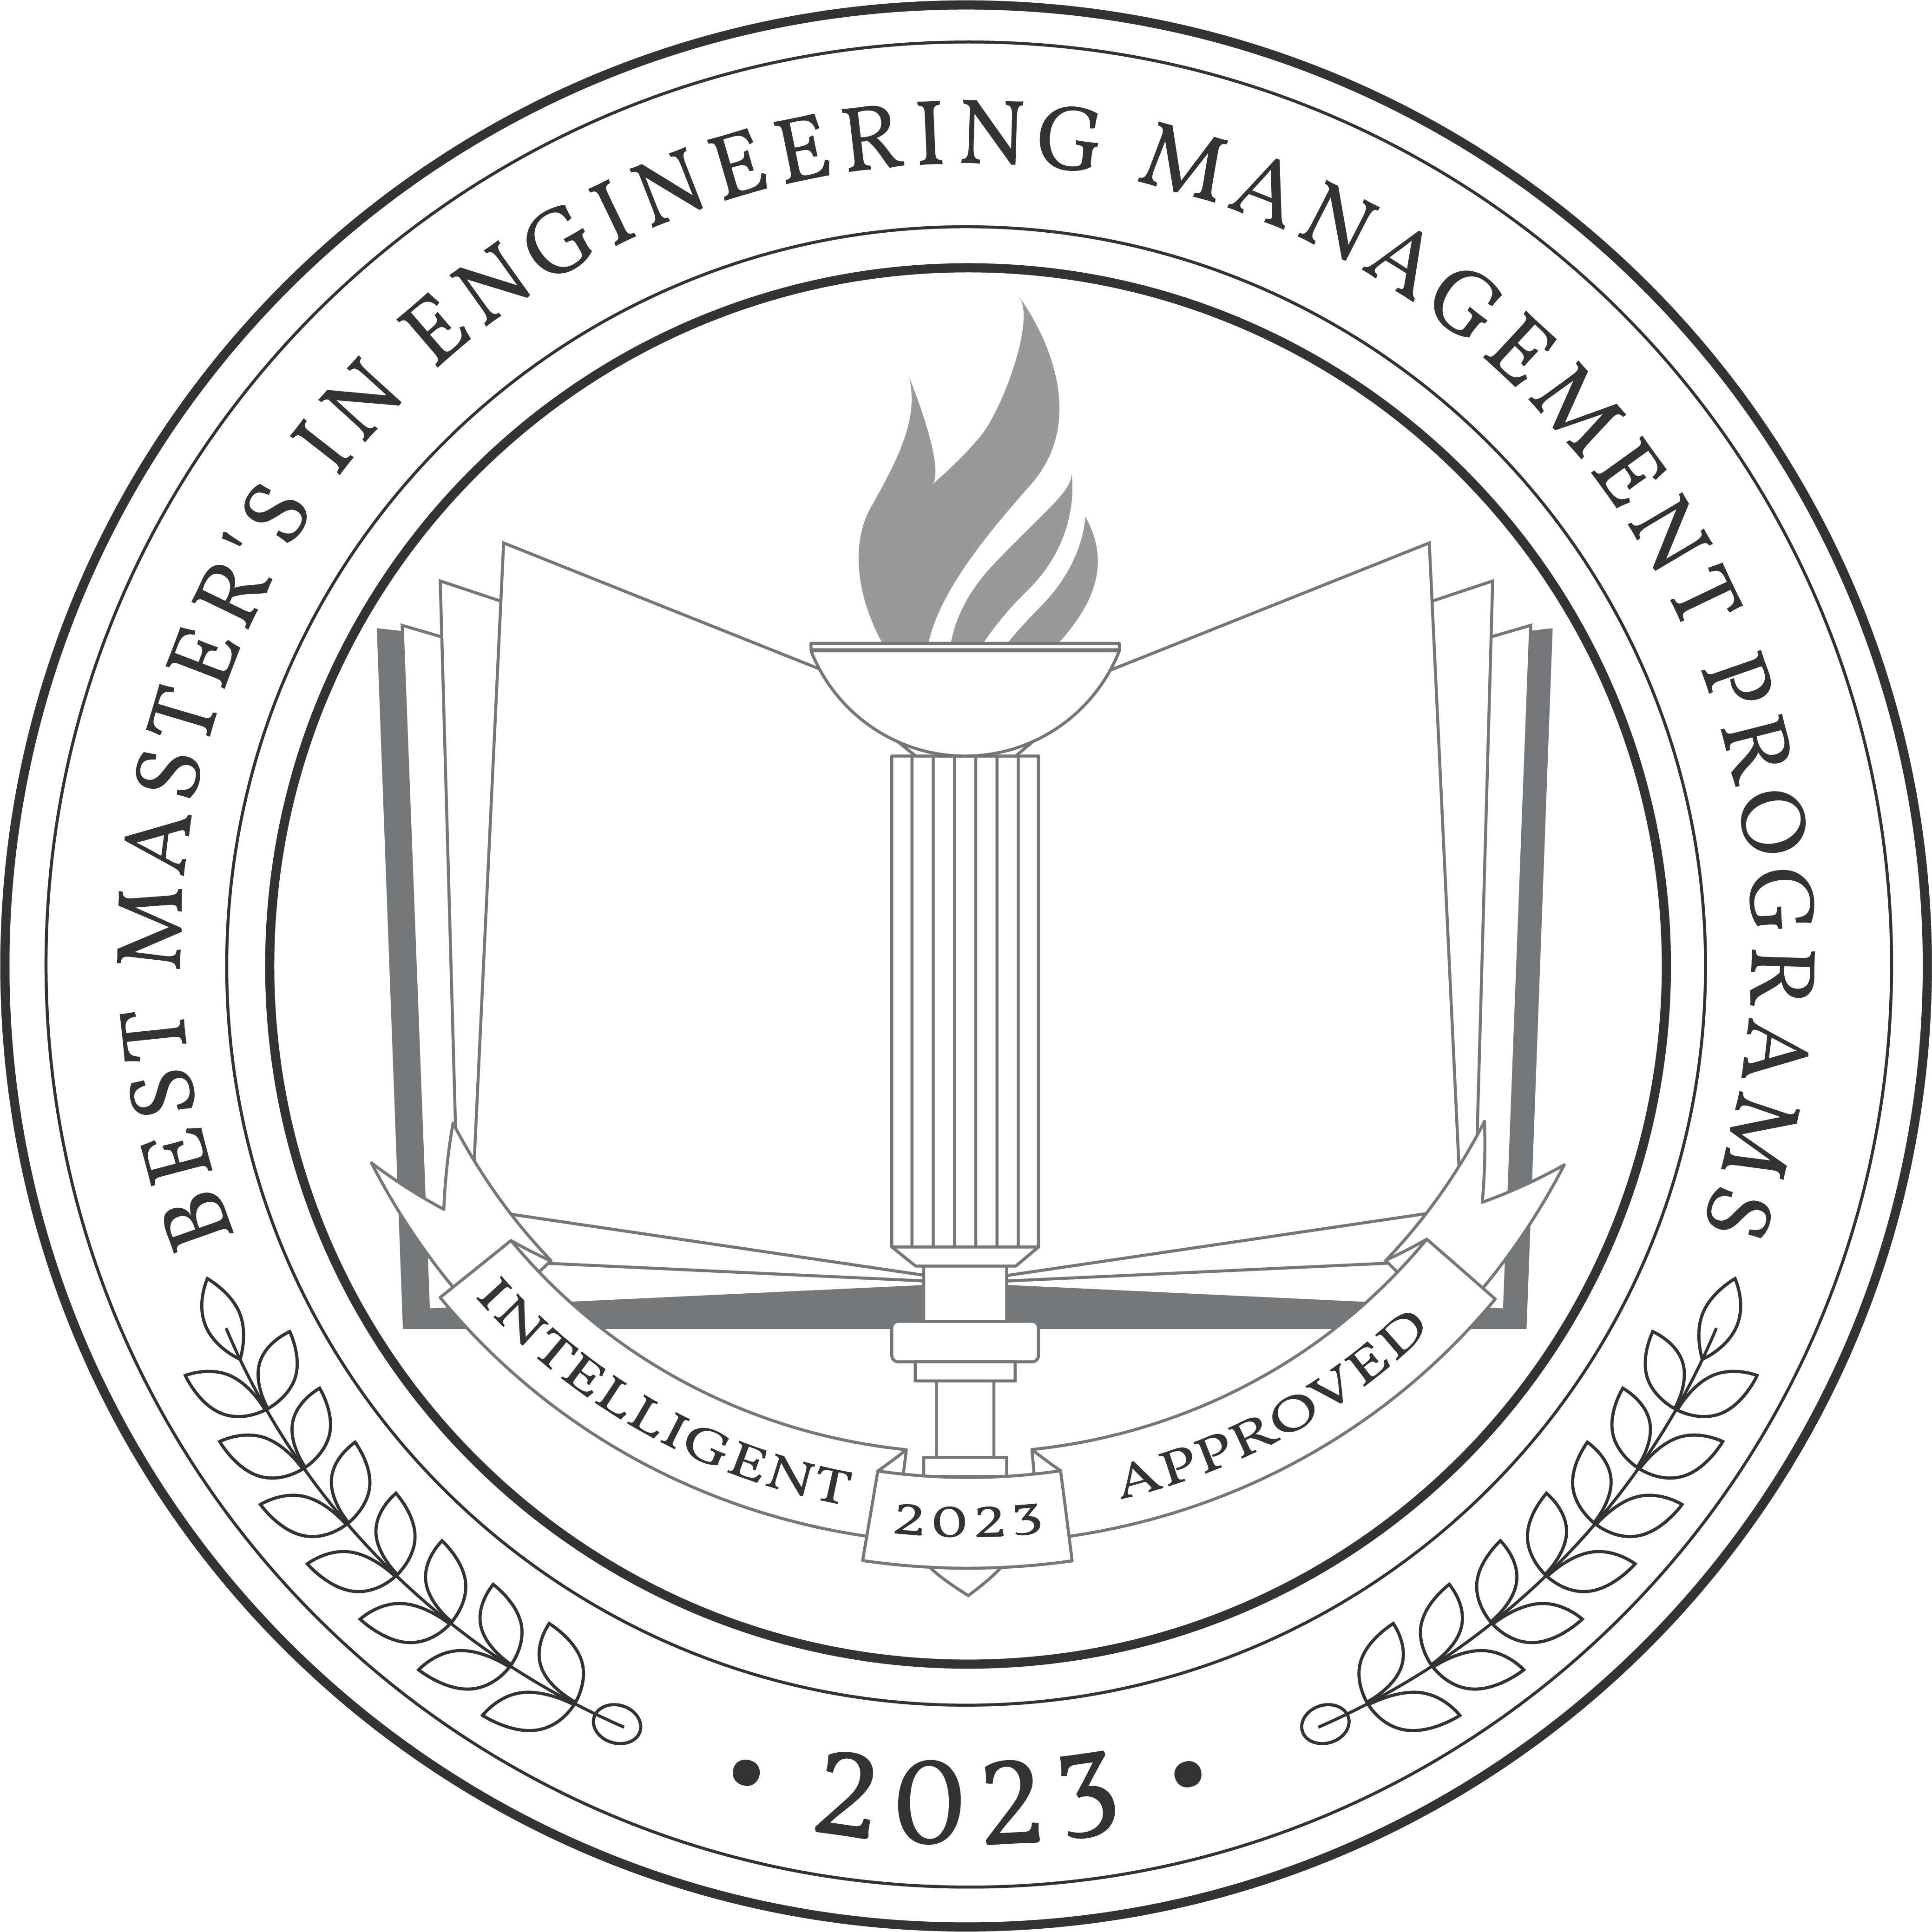 Best Master's in Engineering Management Programs 2023